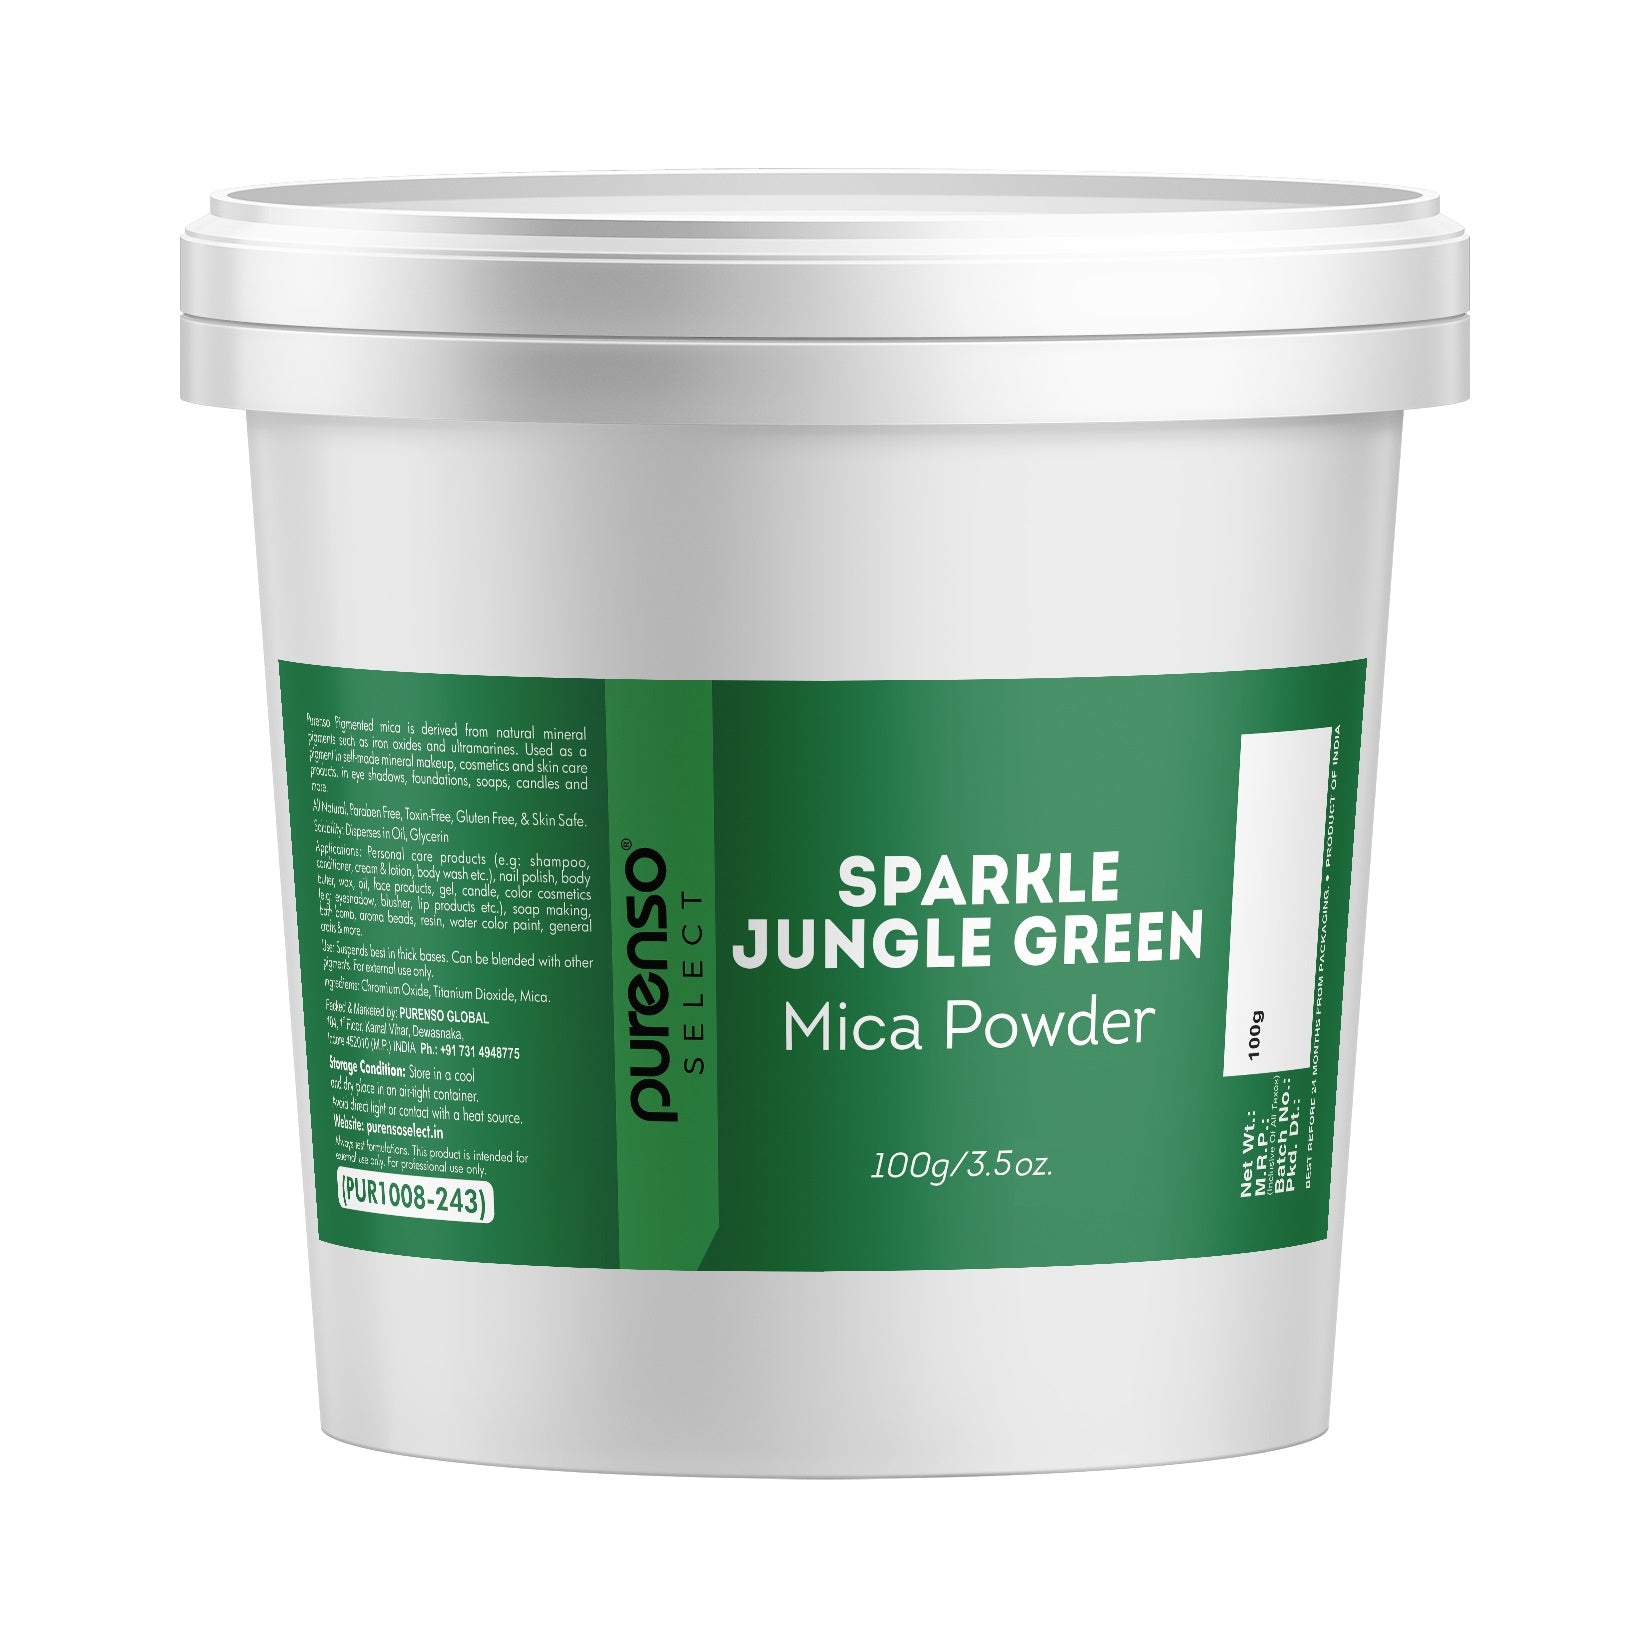 Sparkle Jungle Green Mica Powder